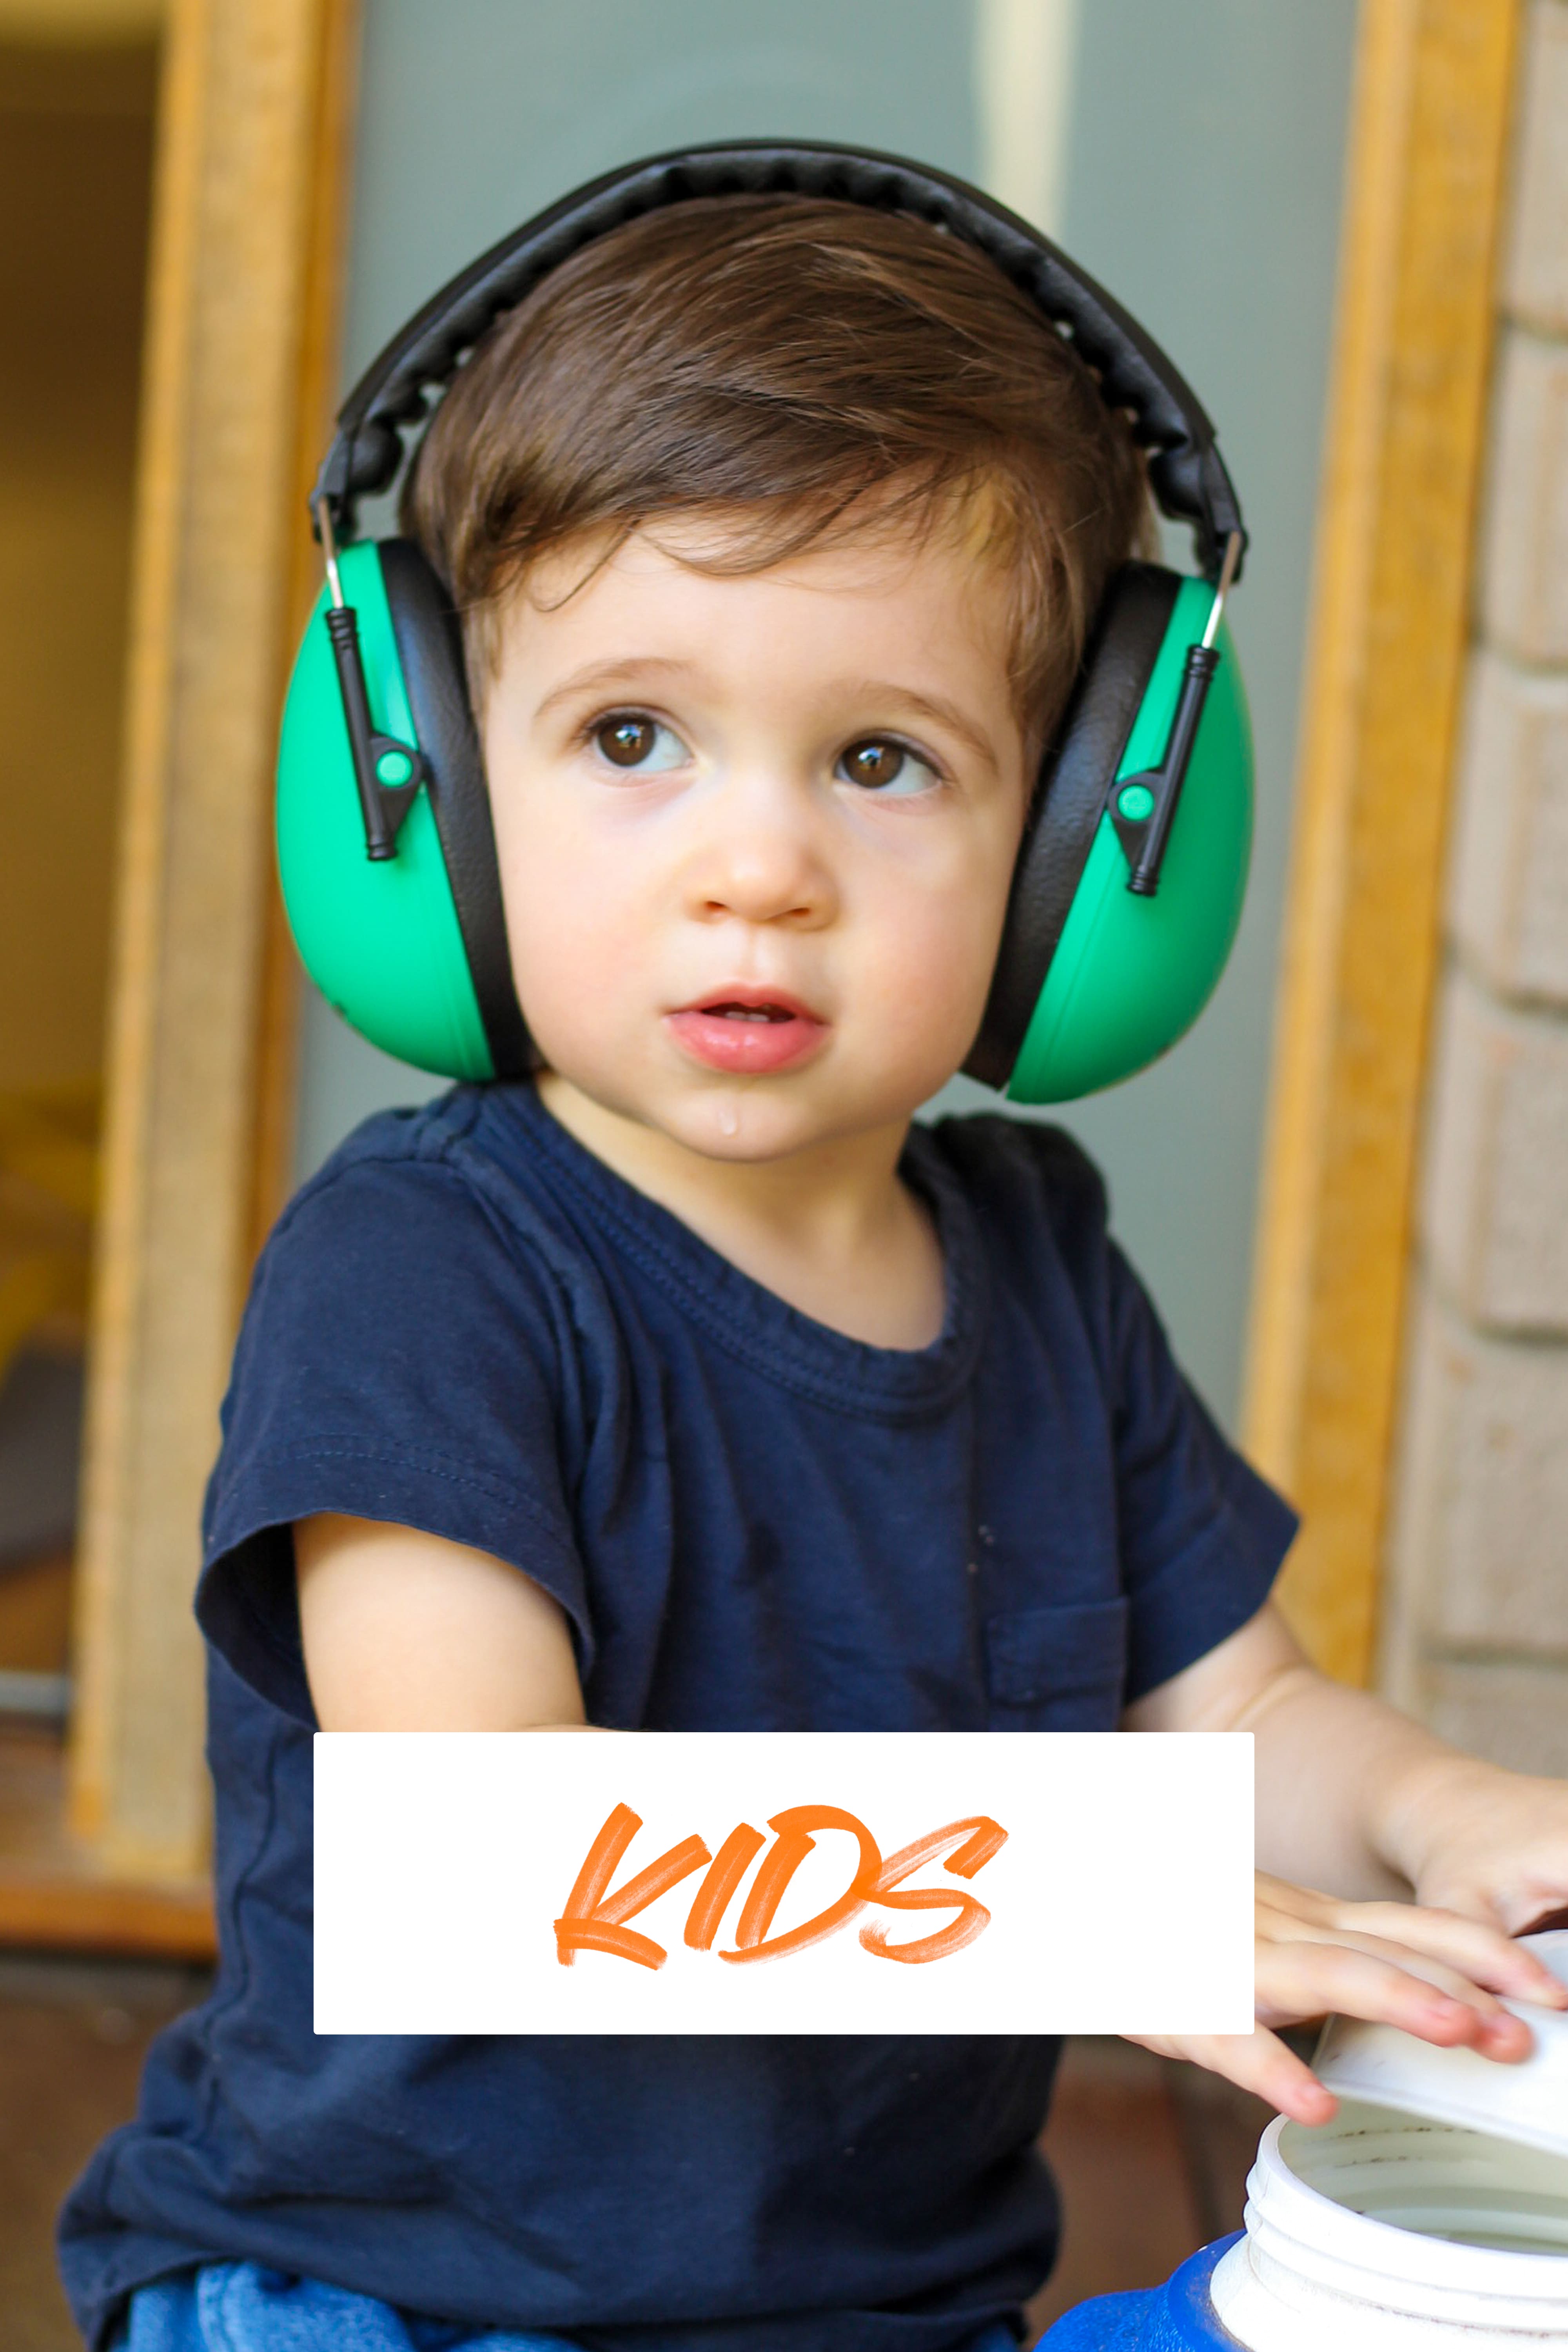 KIDS Earmuffs by Ems for Kids